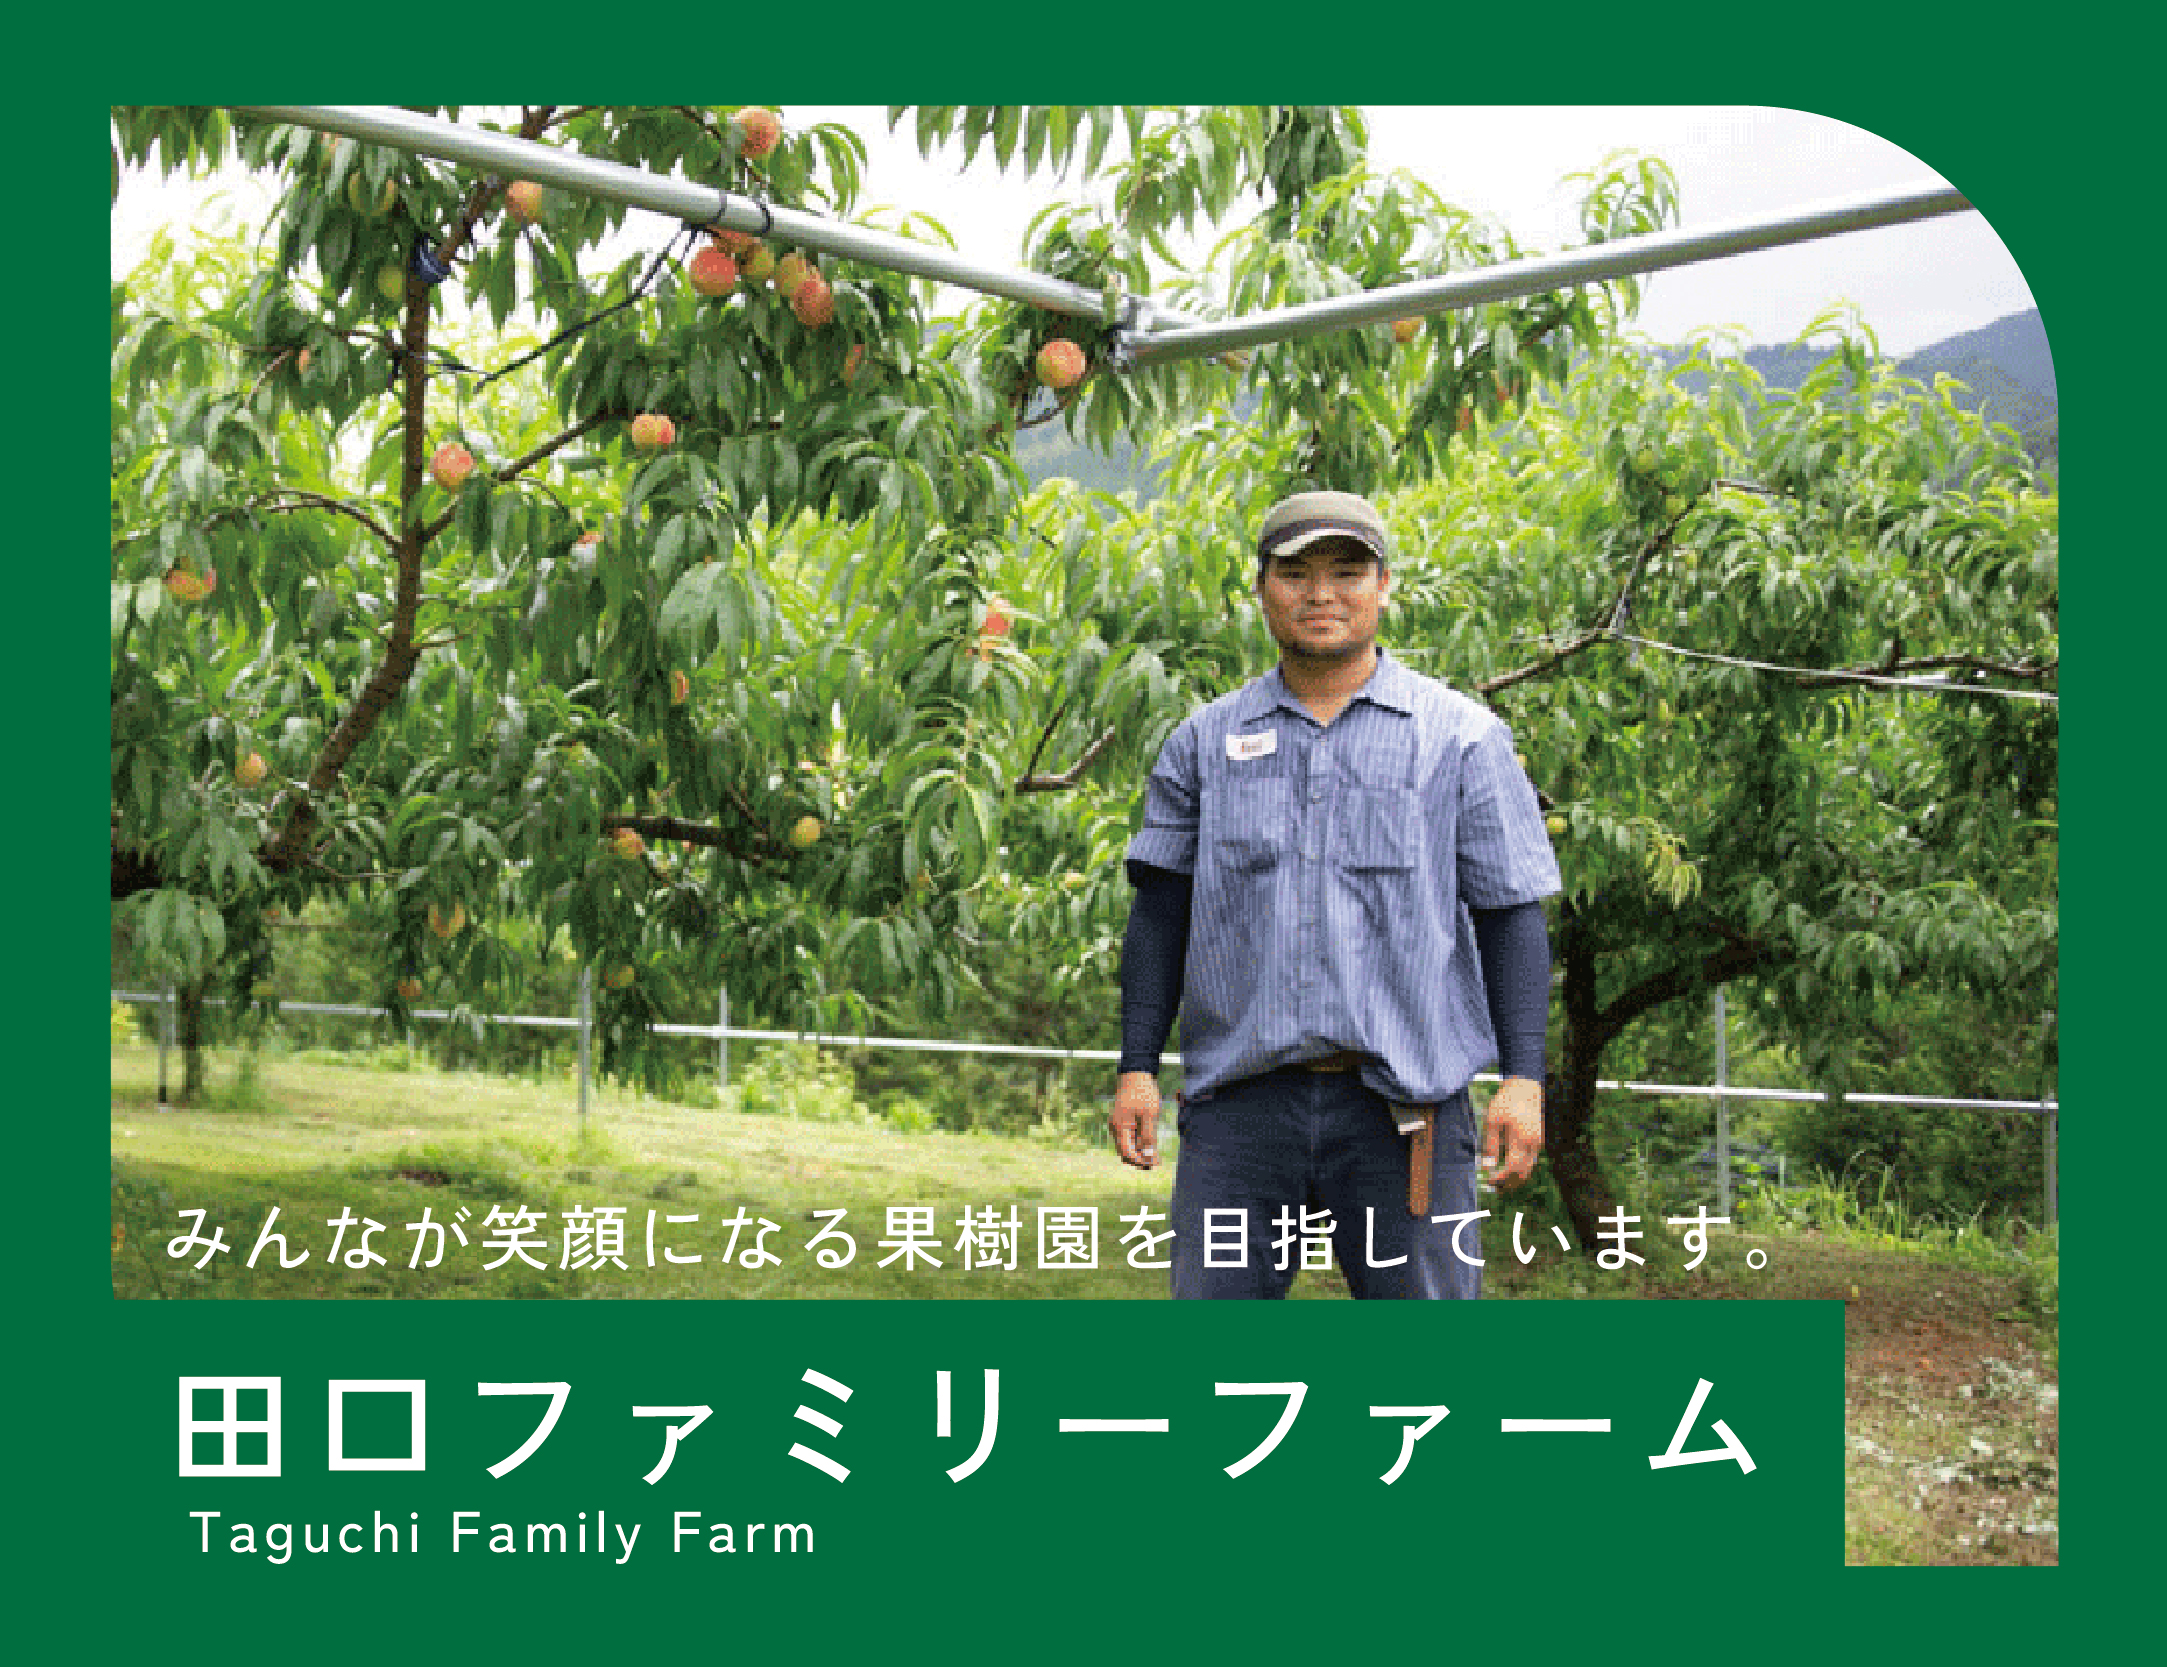 Taguchi Family Farm